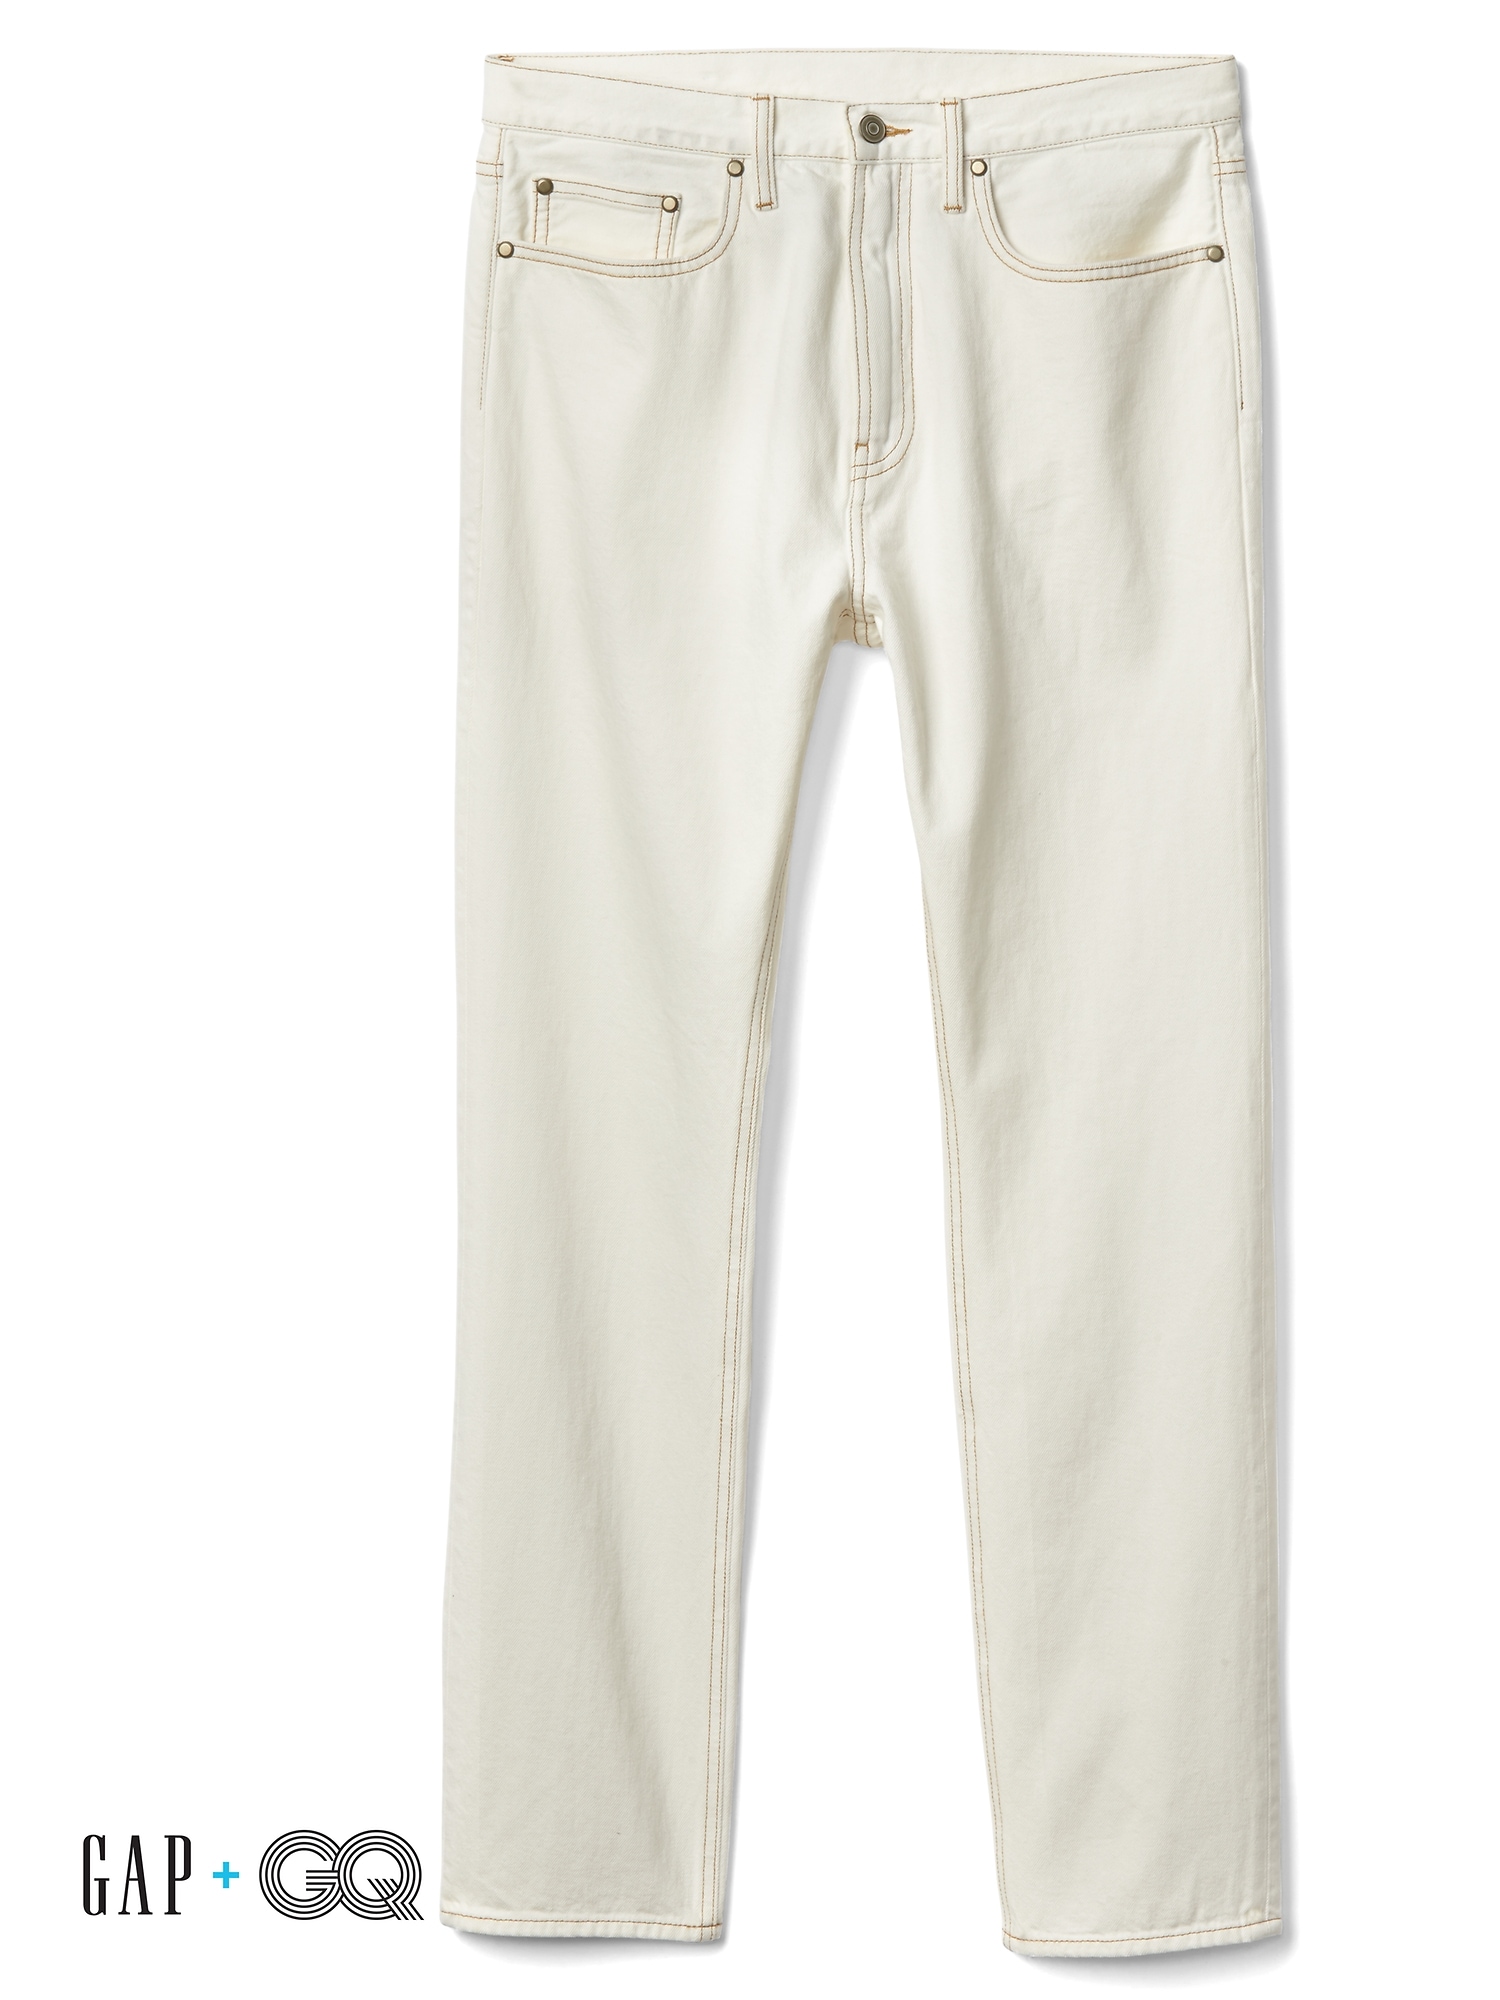 Gap + GQ Ami jeans 5-pocket | Gap fit slim